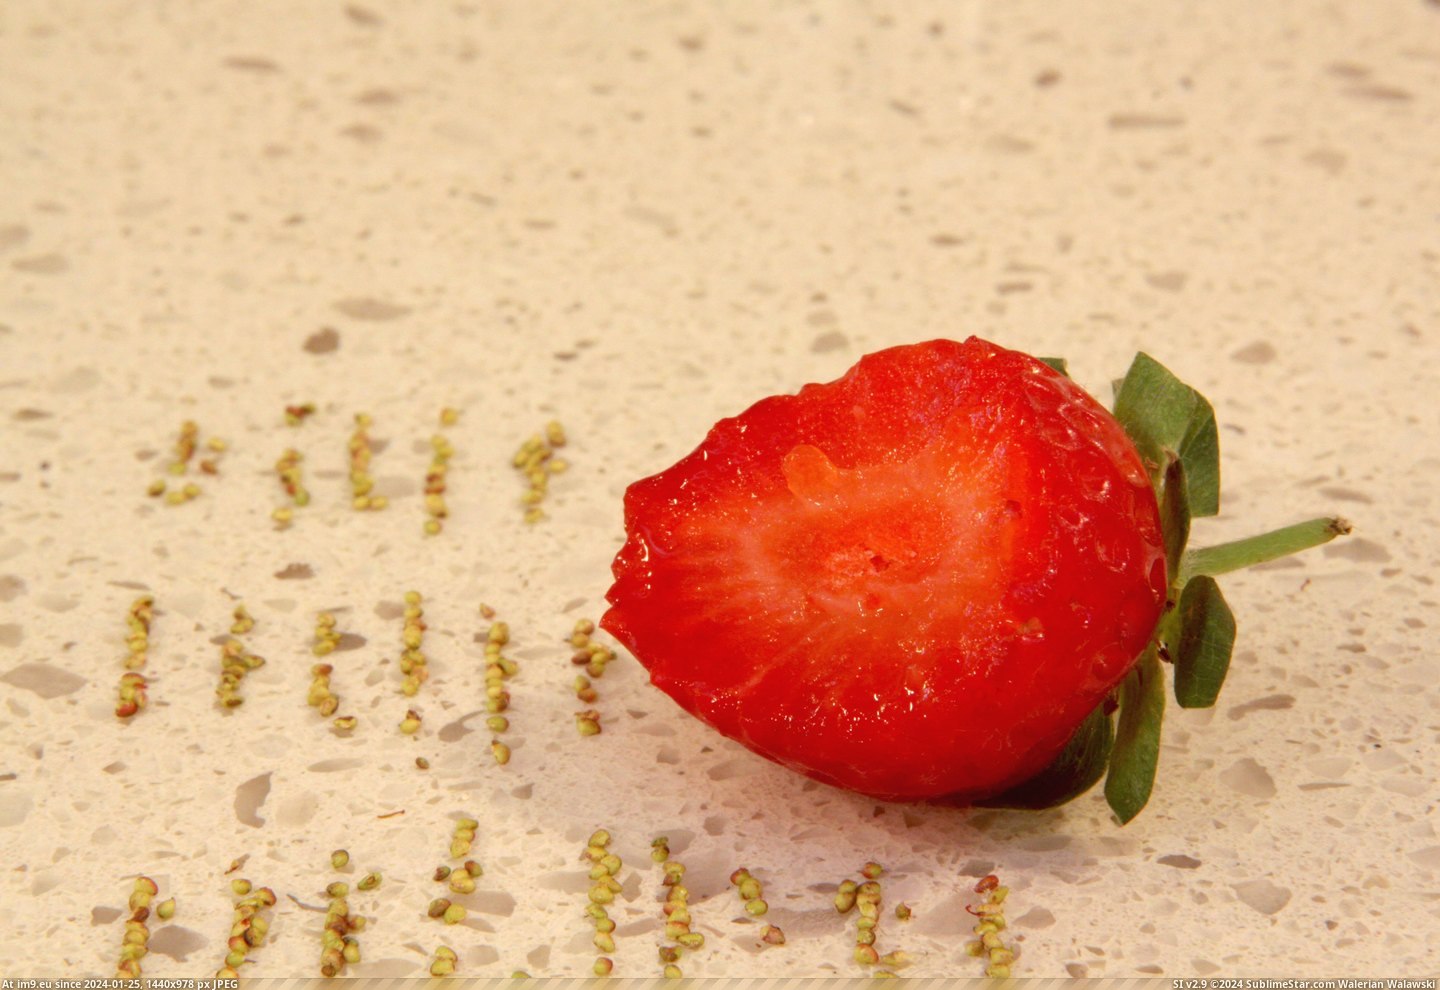 #Strawberry  #Seeds [Mildlyinteresting] This strawberry had 204 seeds. 2 Pic. (Изображение из альбом My r/MILDLYINTERESTING favs))